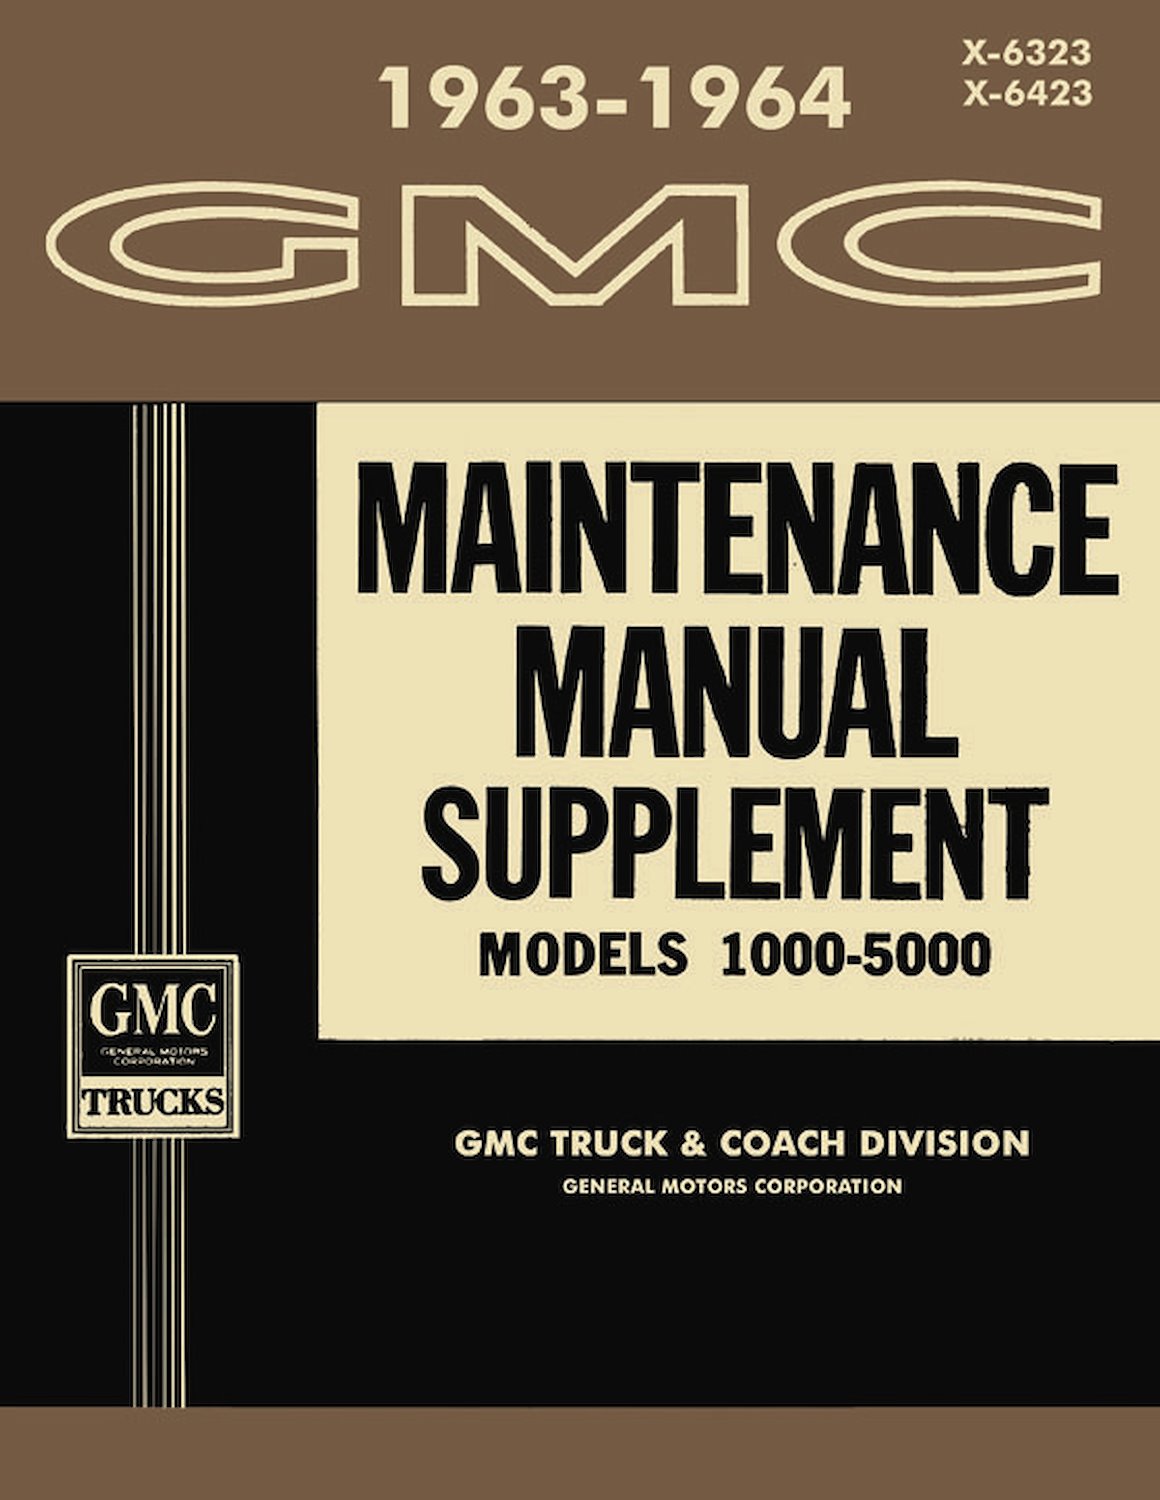 Shop Manual for 1963-1964 GMC Trucks [Supplement]